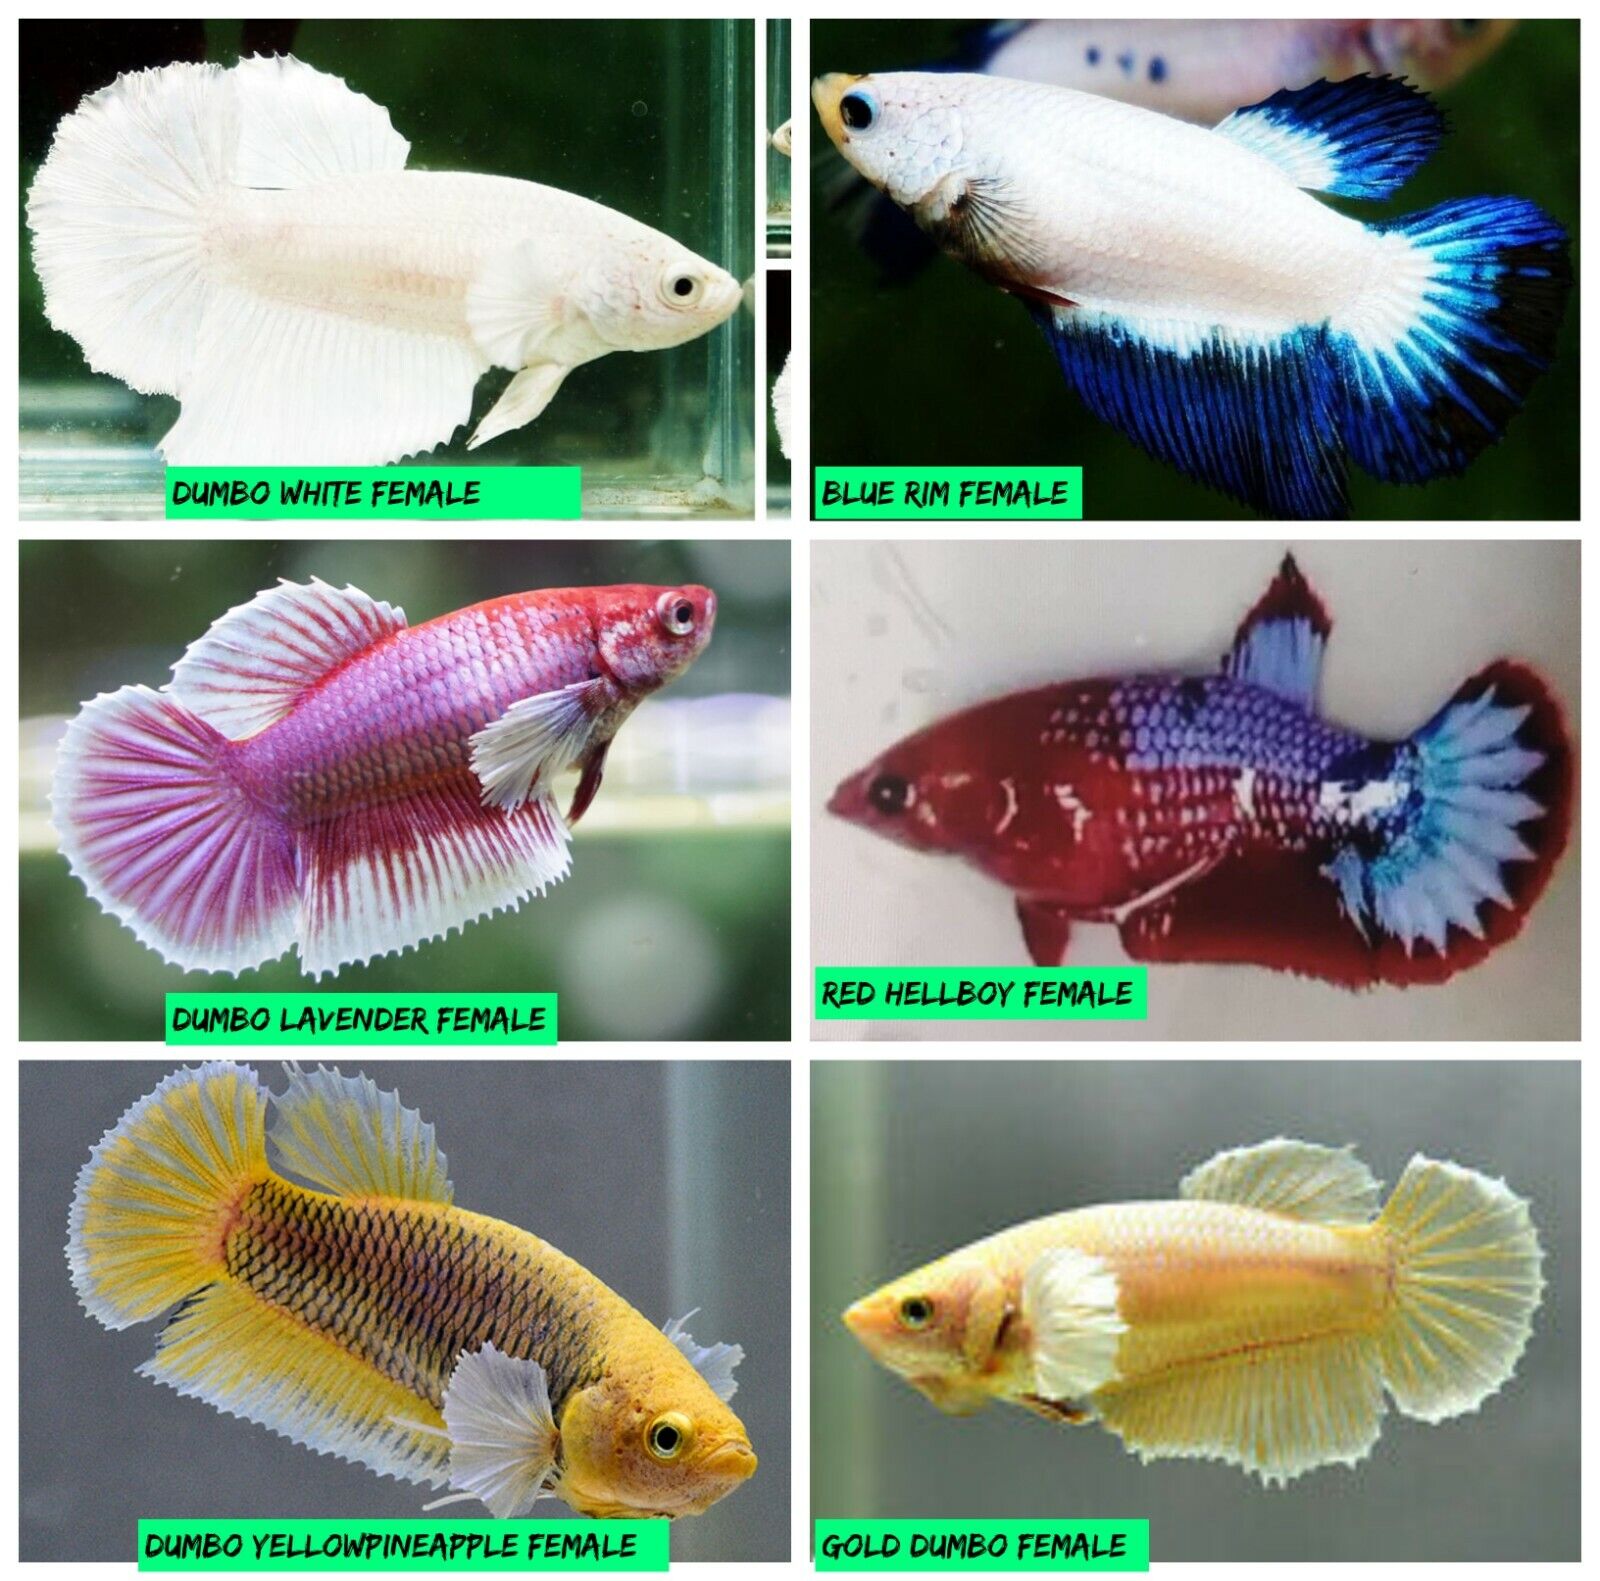  Live Betta Fish Female Sorority Lavender, White, Gold Dumbo, Red Hellboy & More